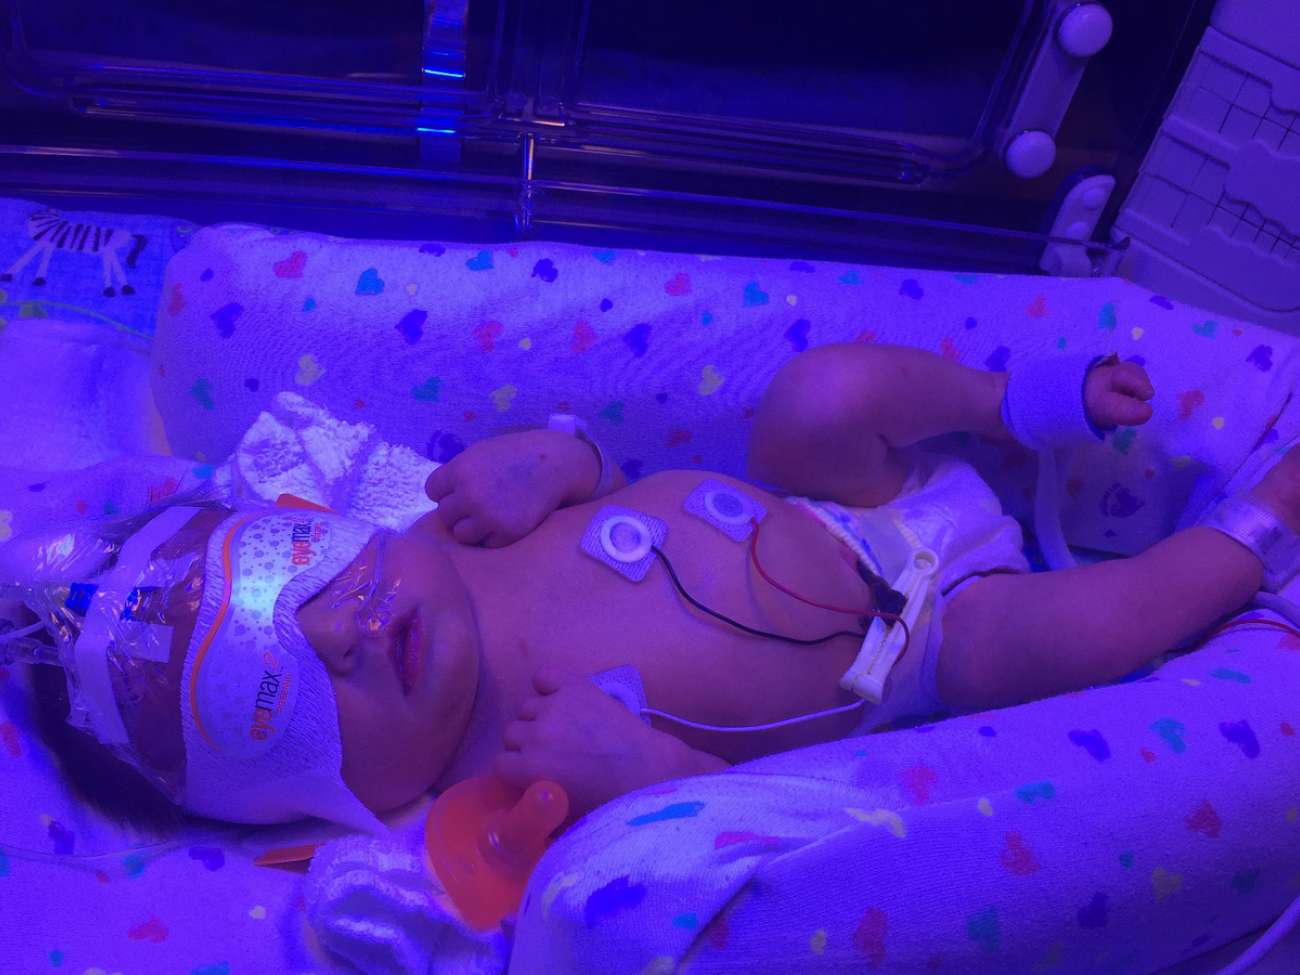 Mateo as a newborn in GRH's neonatal intensive care unit